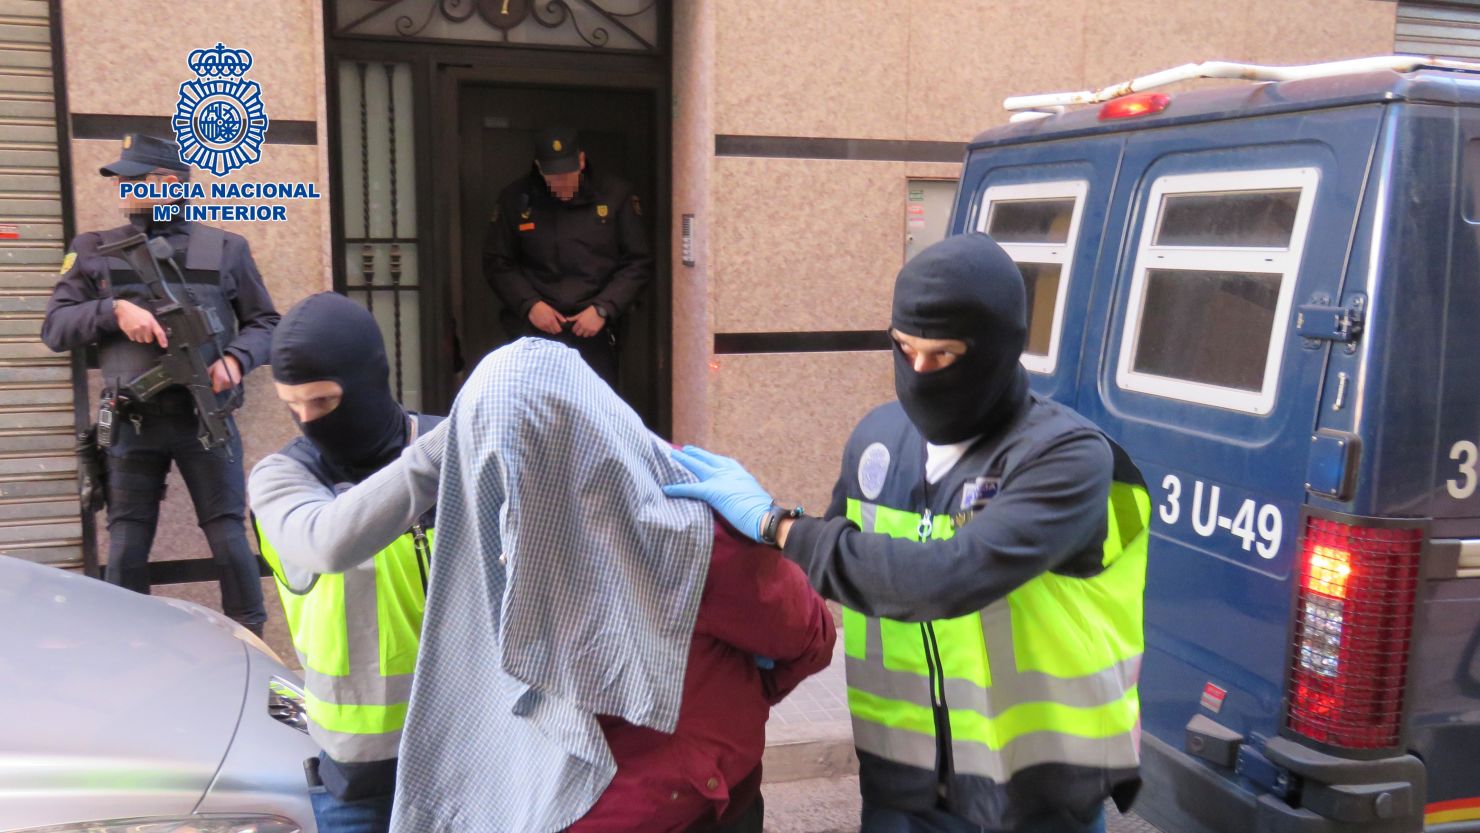 Spanish police wearing balaclavas escort one of the terror suspects arrested Sunday.